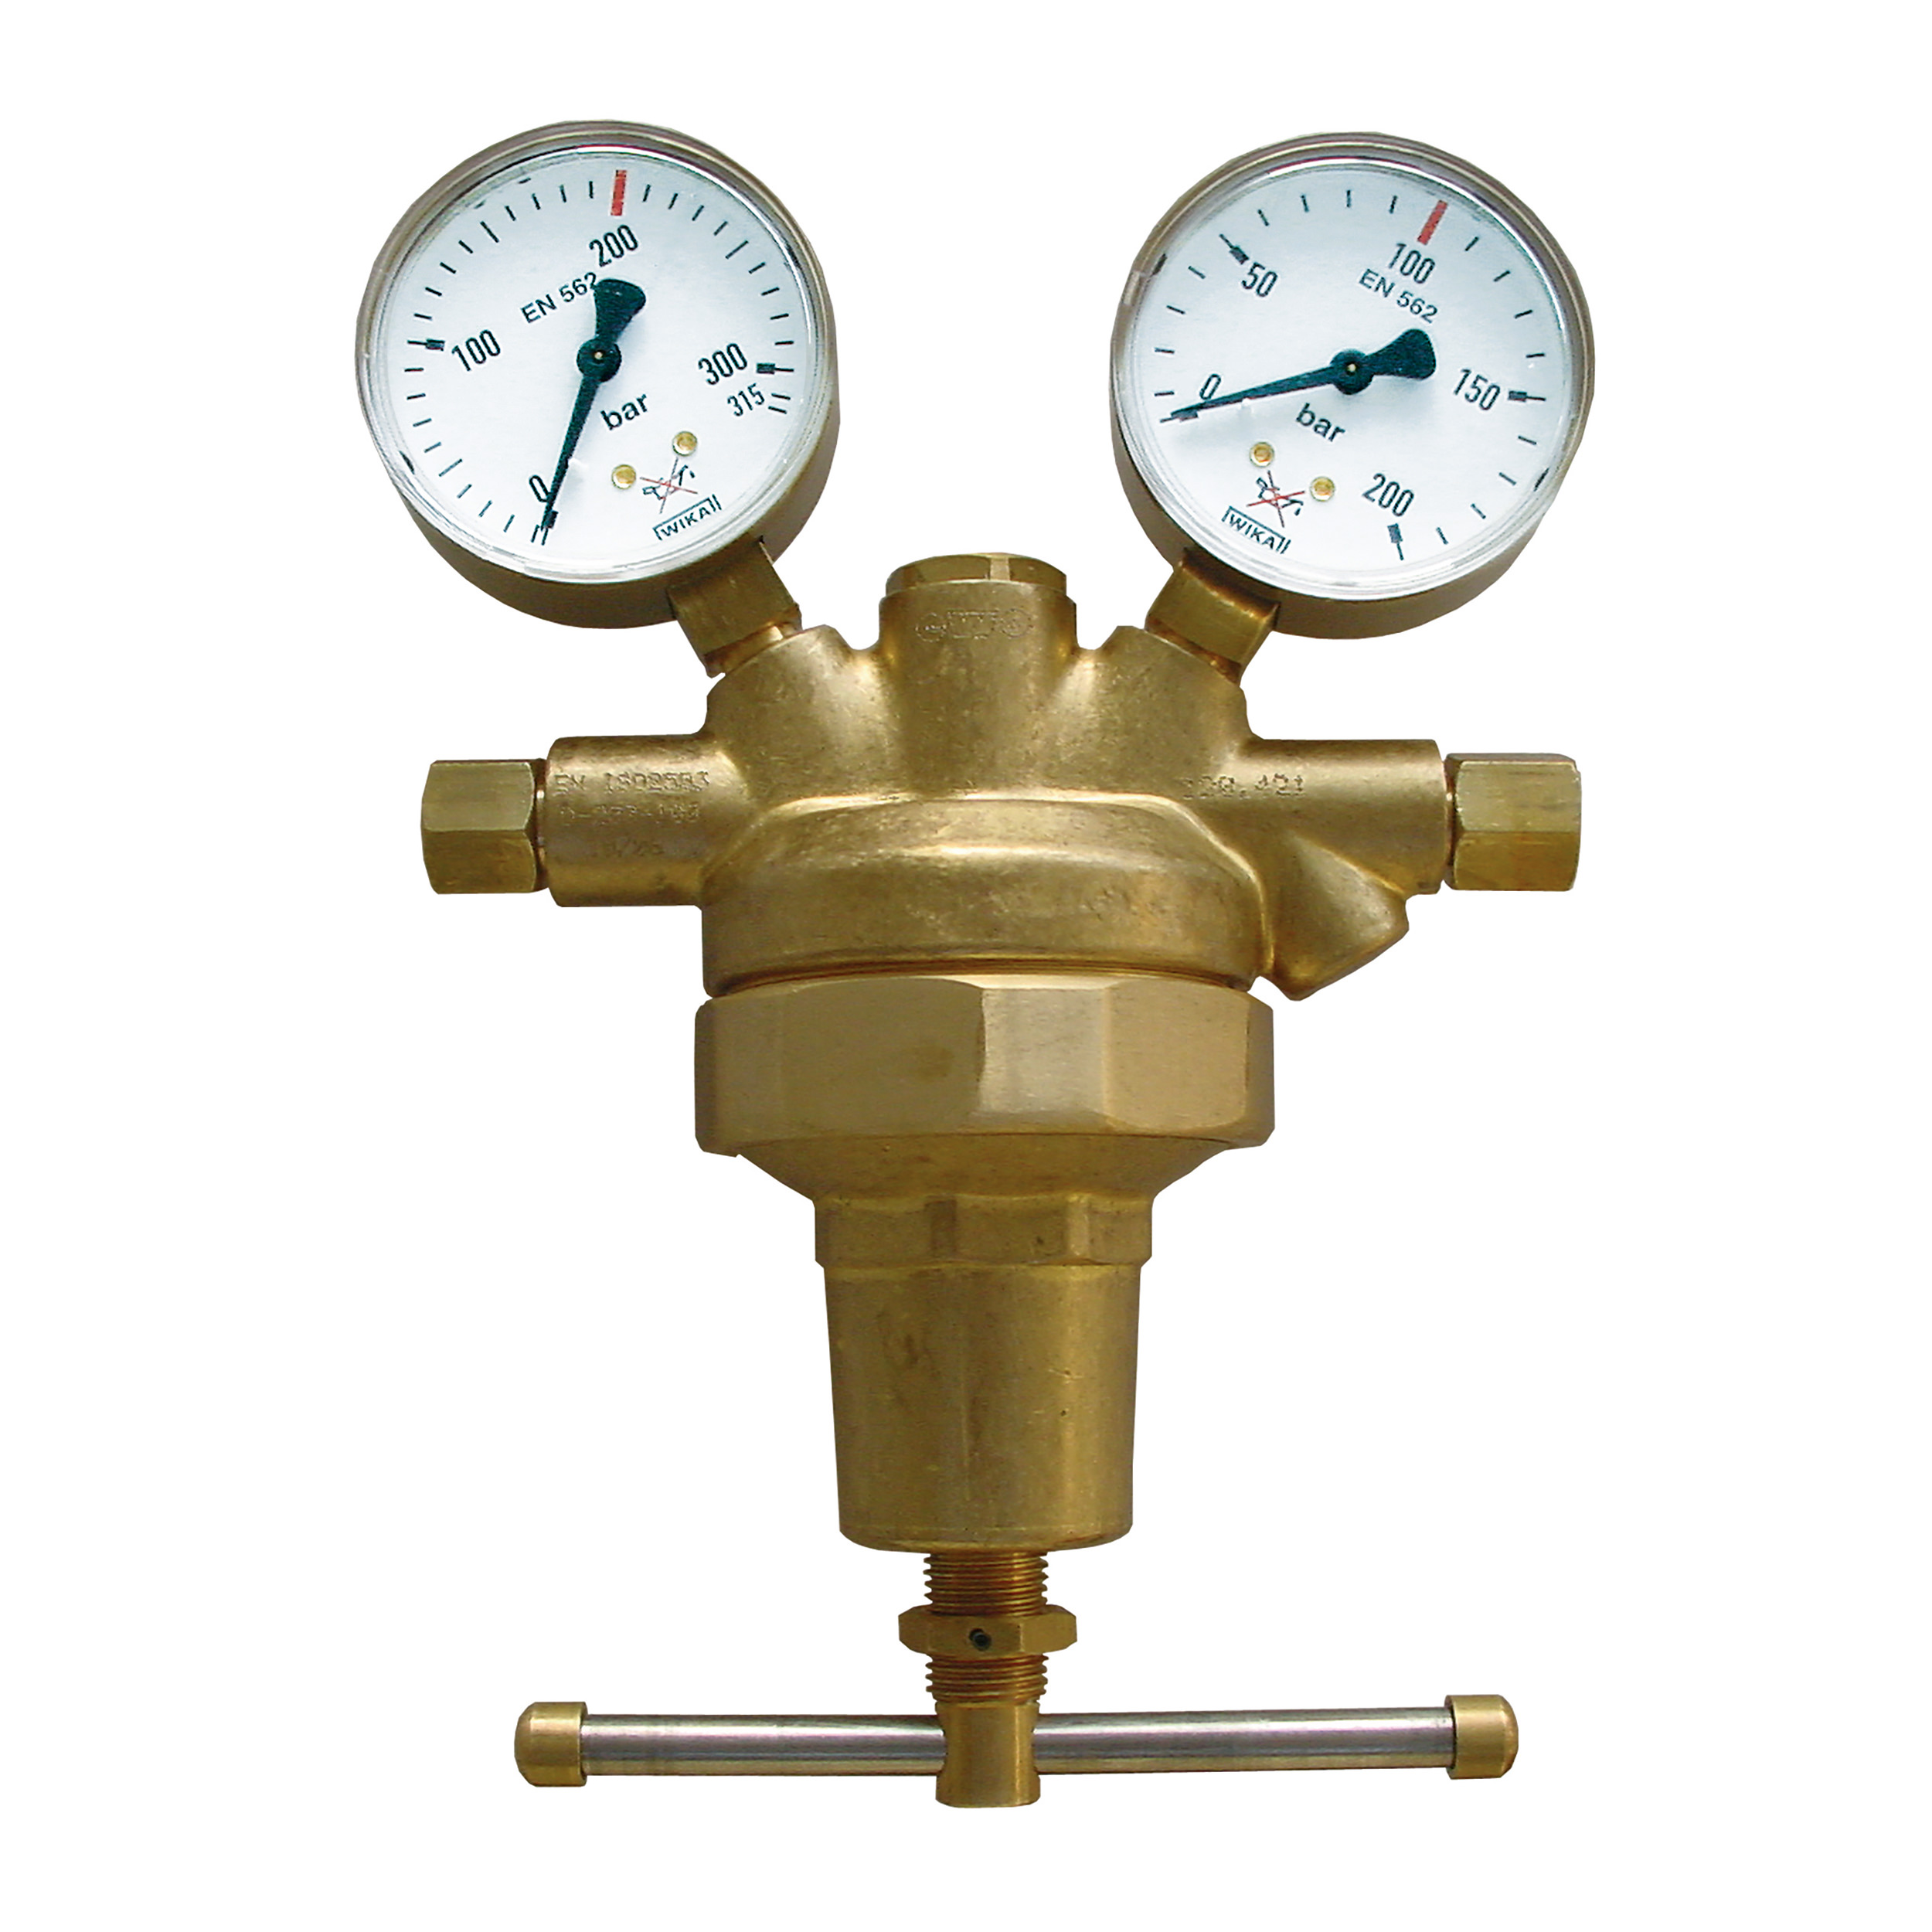 Pressure line regulator, G¼, p₁: 2,900 psi, p2: 725 psi, handwheel, 2 gauges